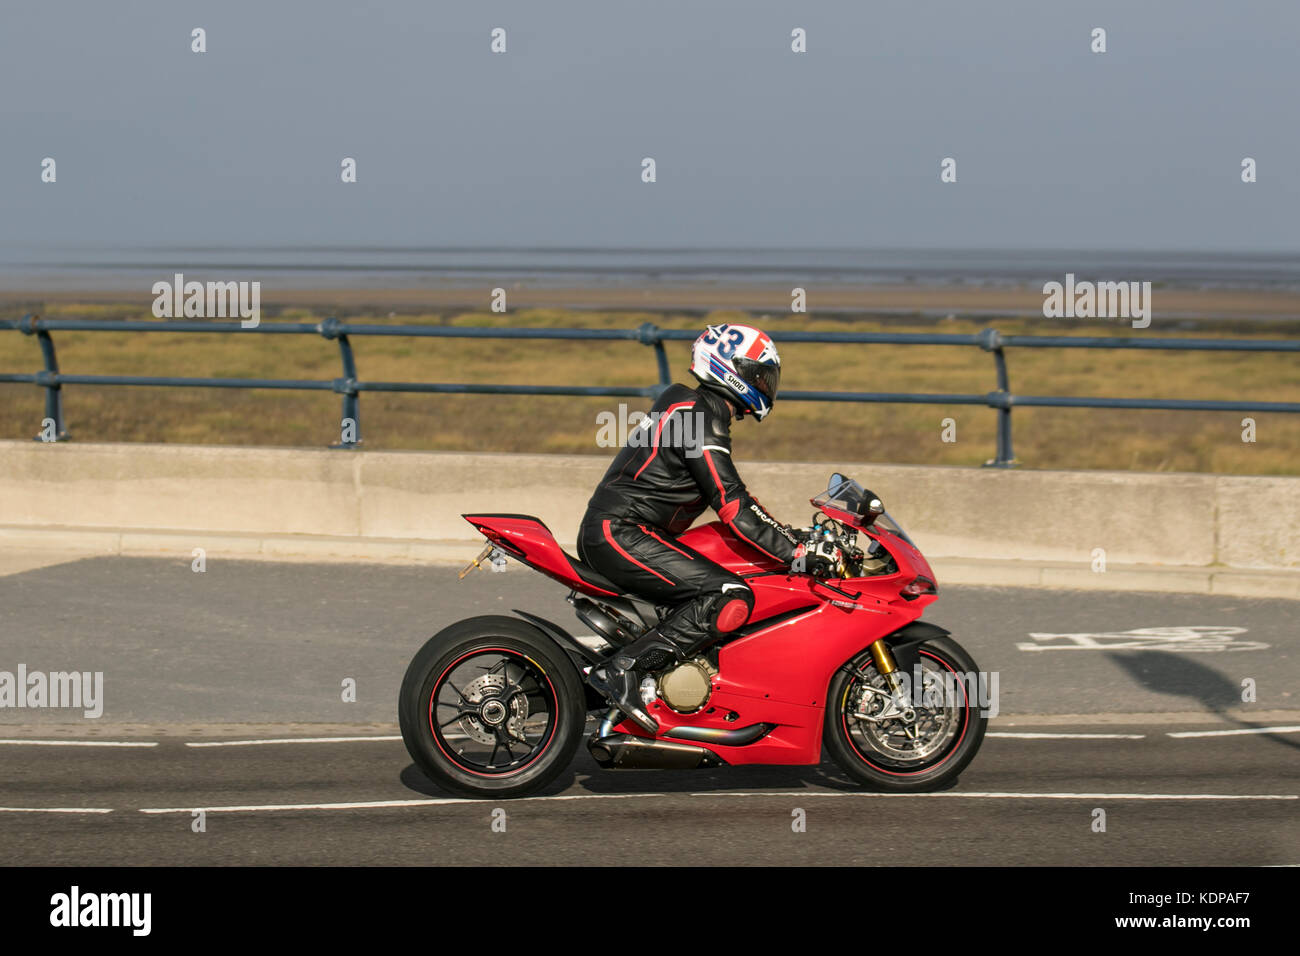 Ducati 1299 Superleggera High Resolution Stock Photography And Images Alamy